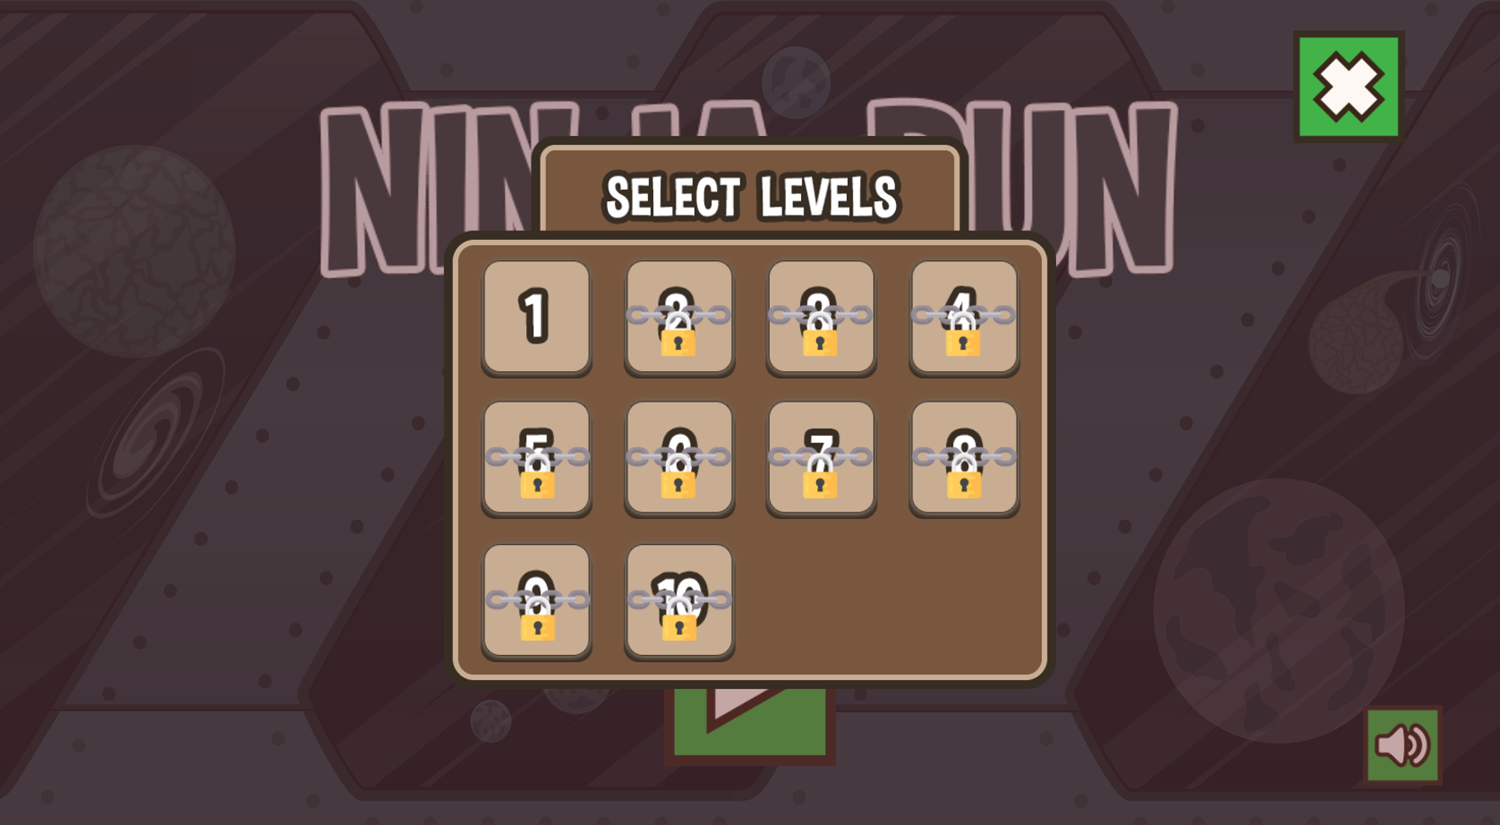 Ninja Run Game Select Level Welcome Screen Screenshot.